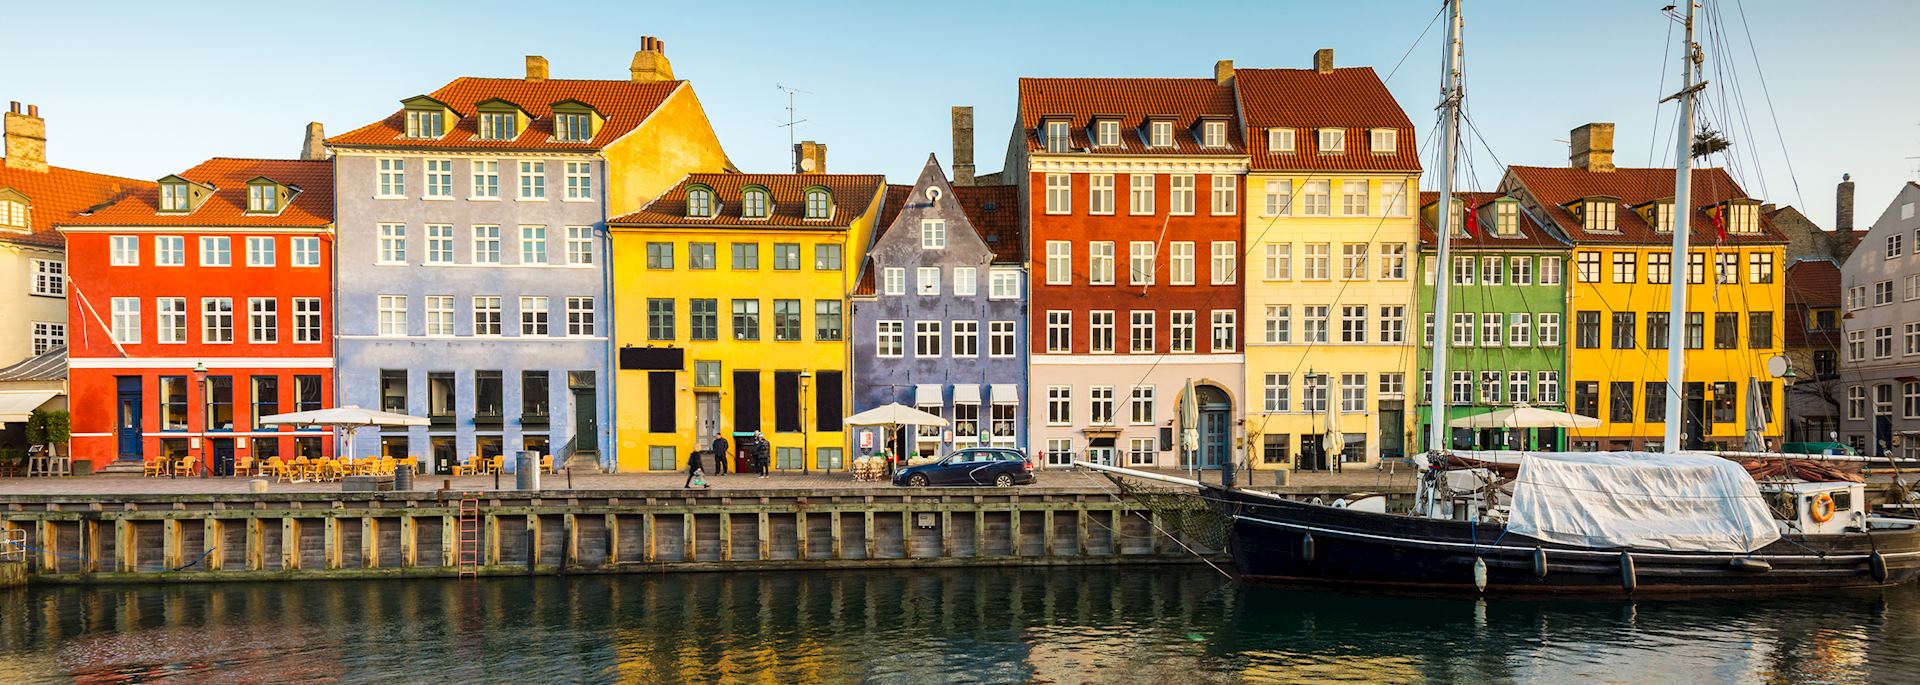 The waterfront canal of Nyhavn, Copenhagen